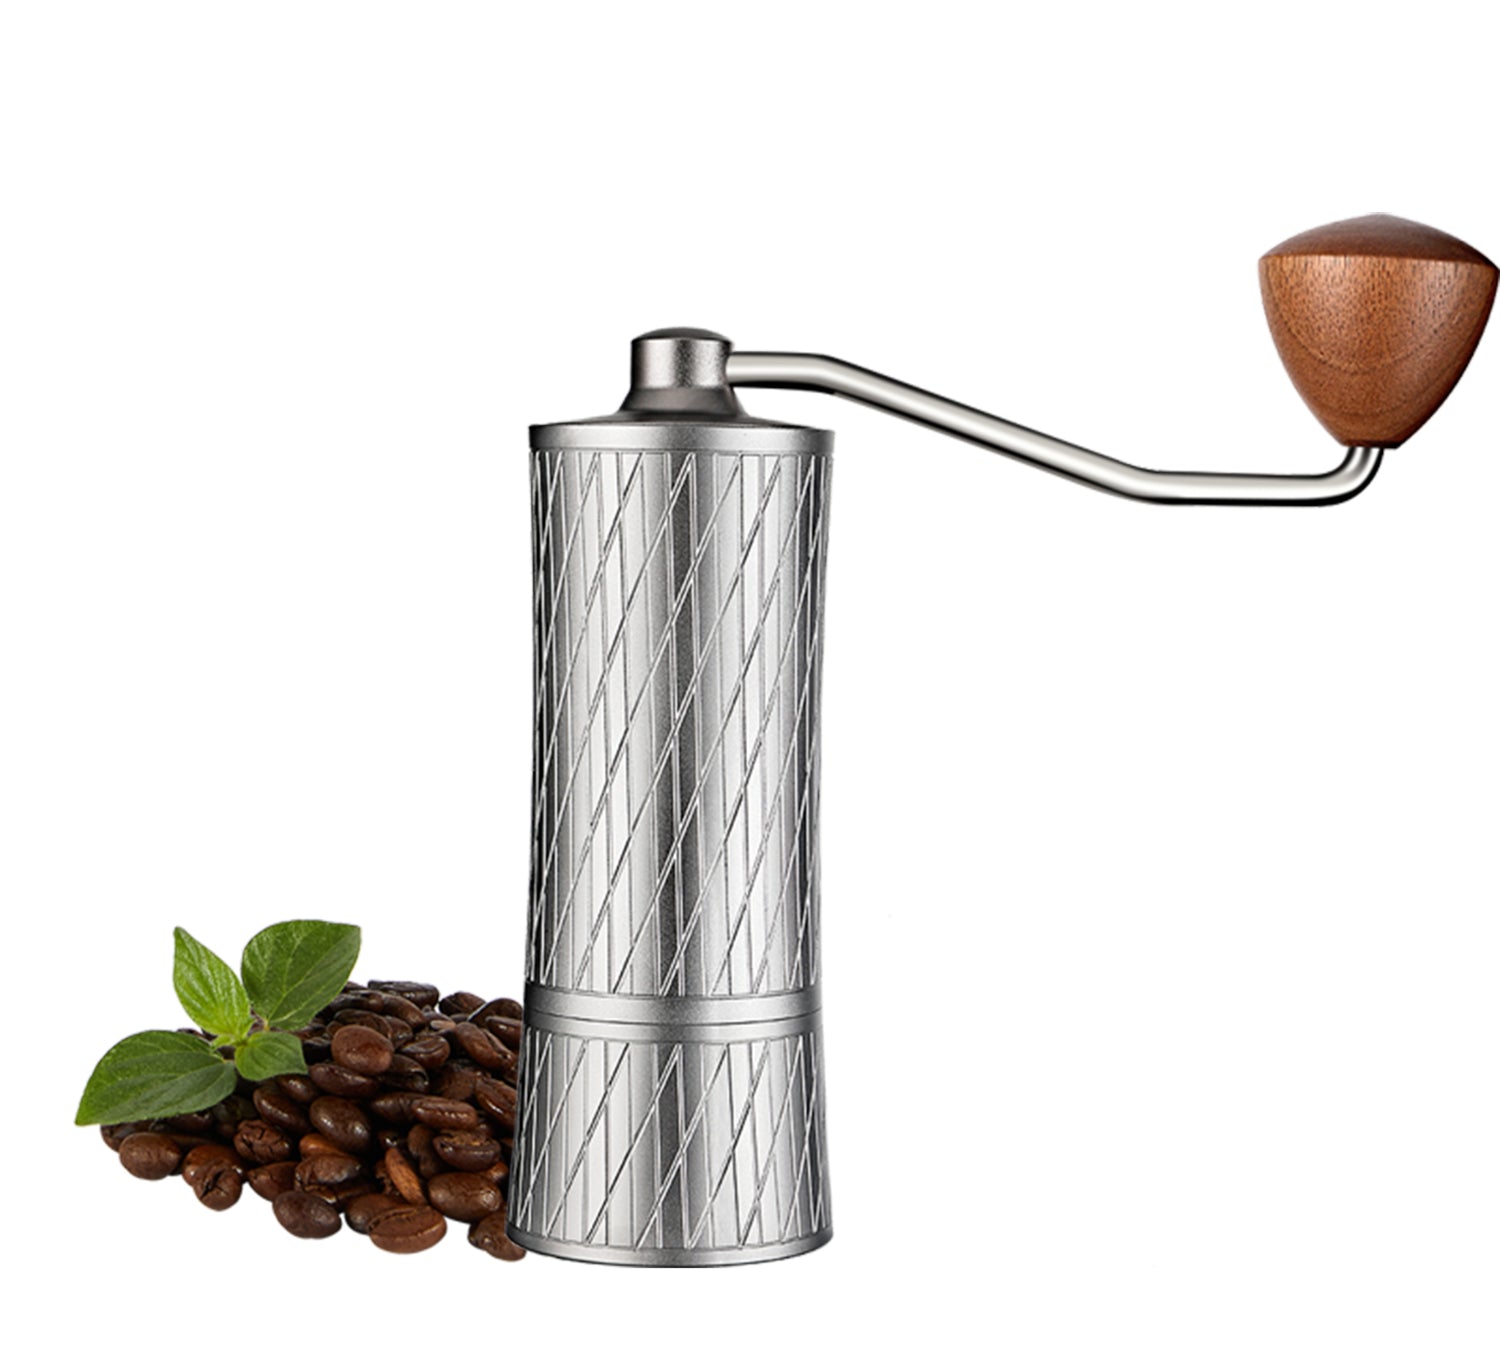 Manual Coffee Grinder Stainless Steel With Adjustable Coarseness Settings